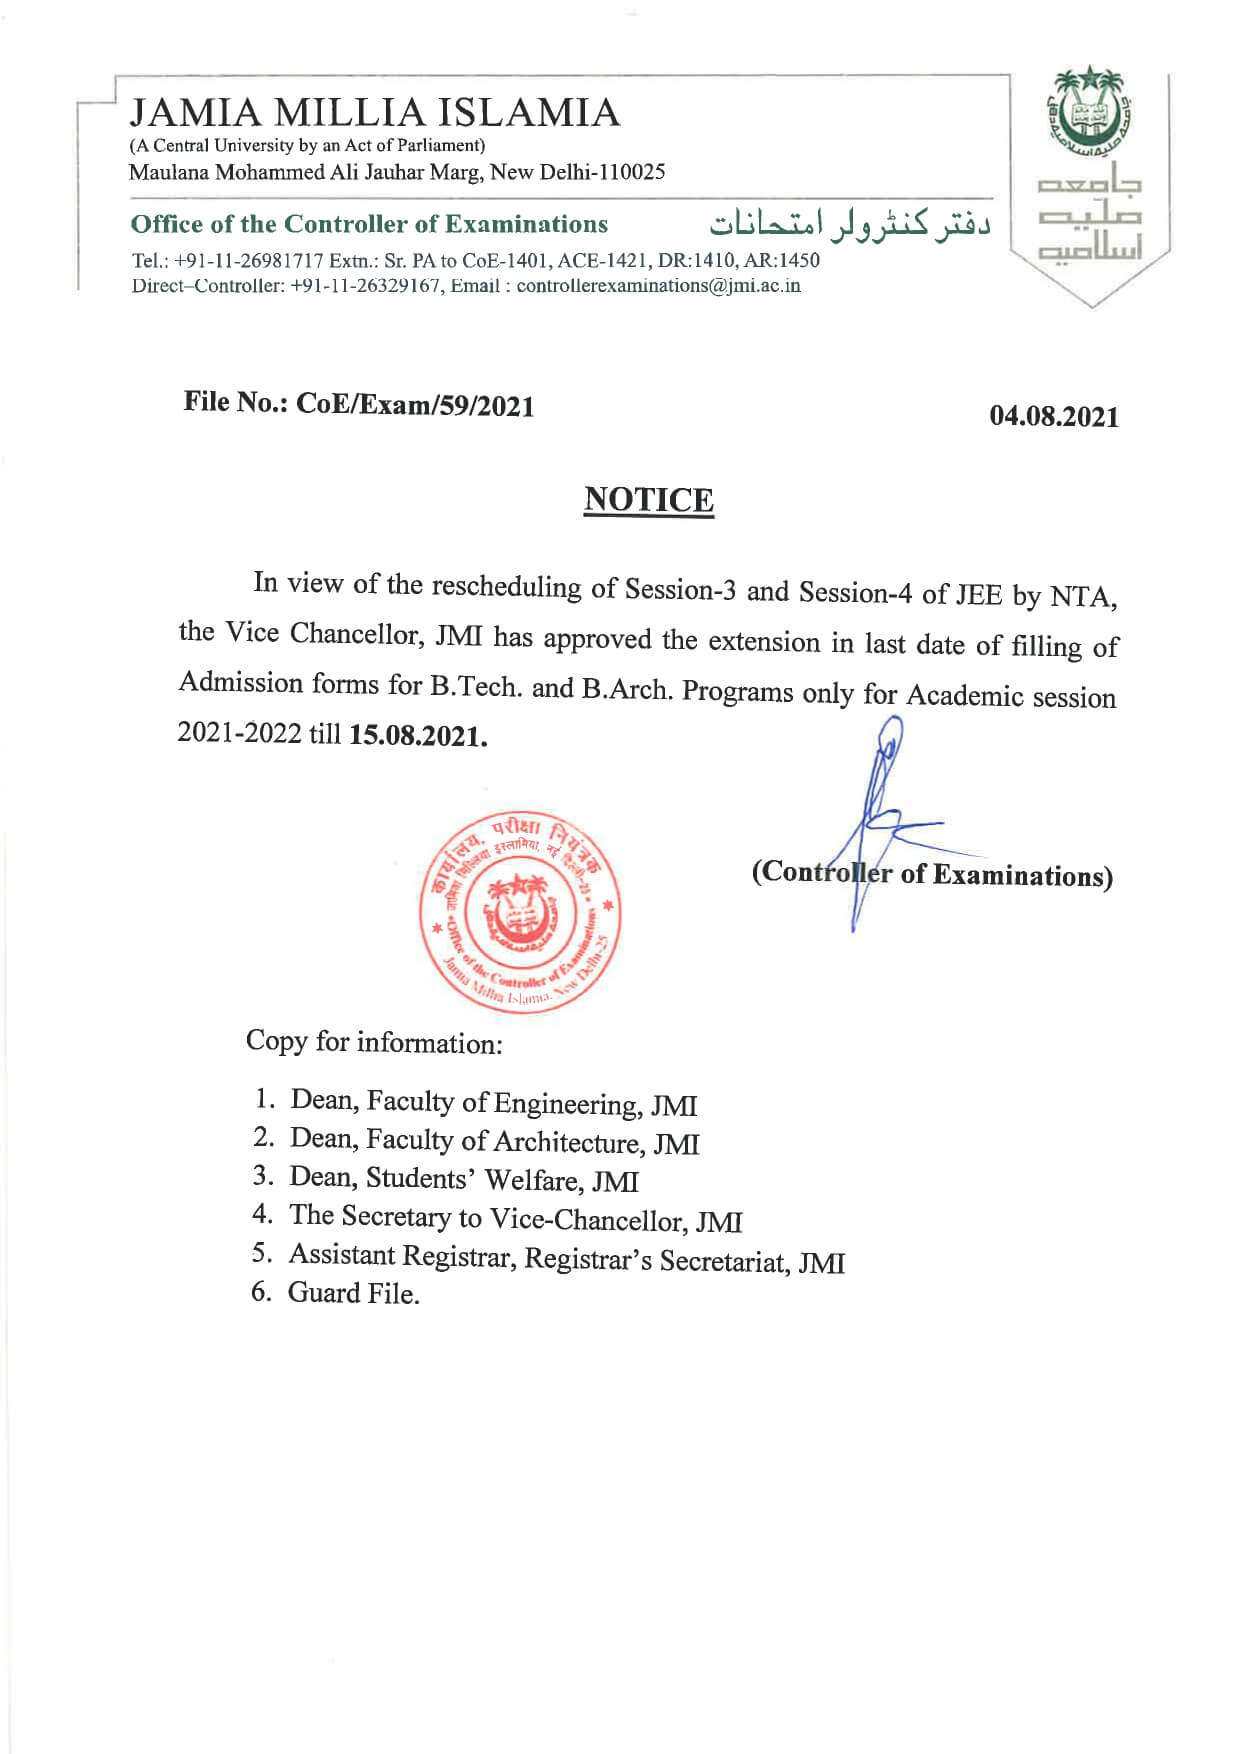 JMI Delhi Admissions 2021 Last Date Extended Notice